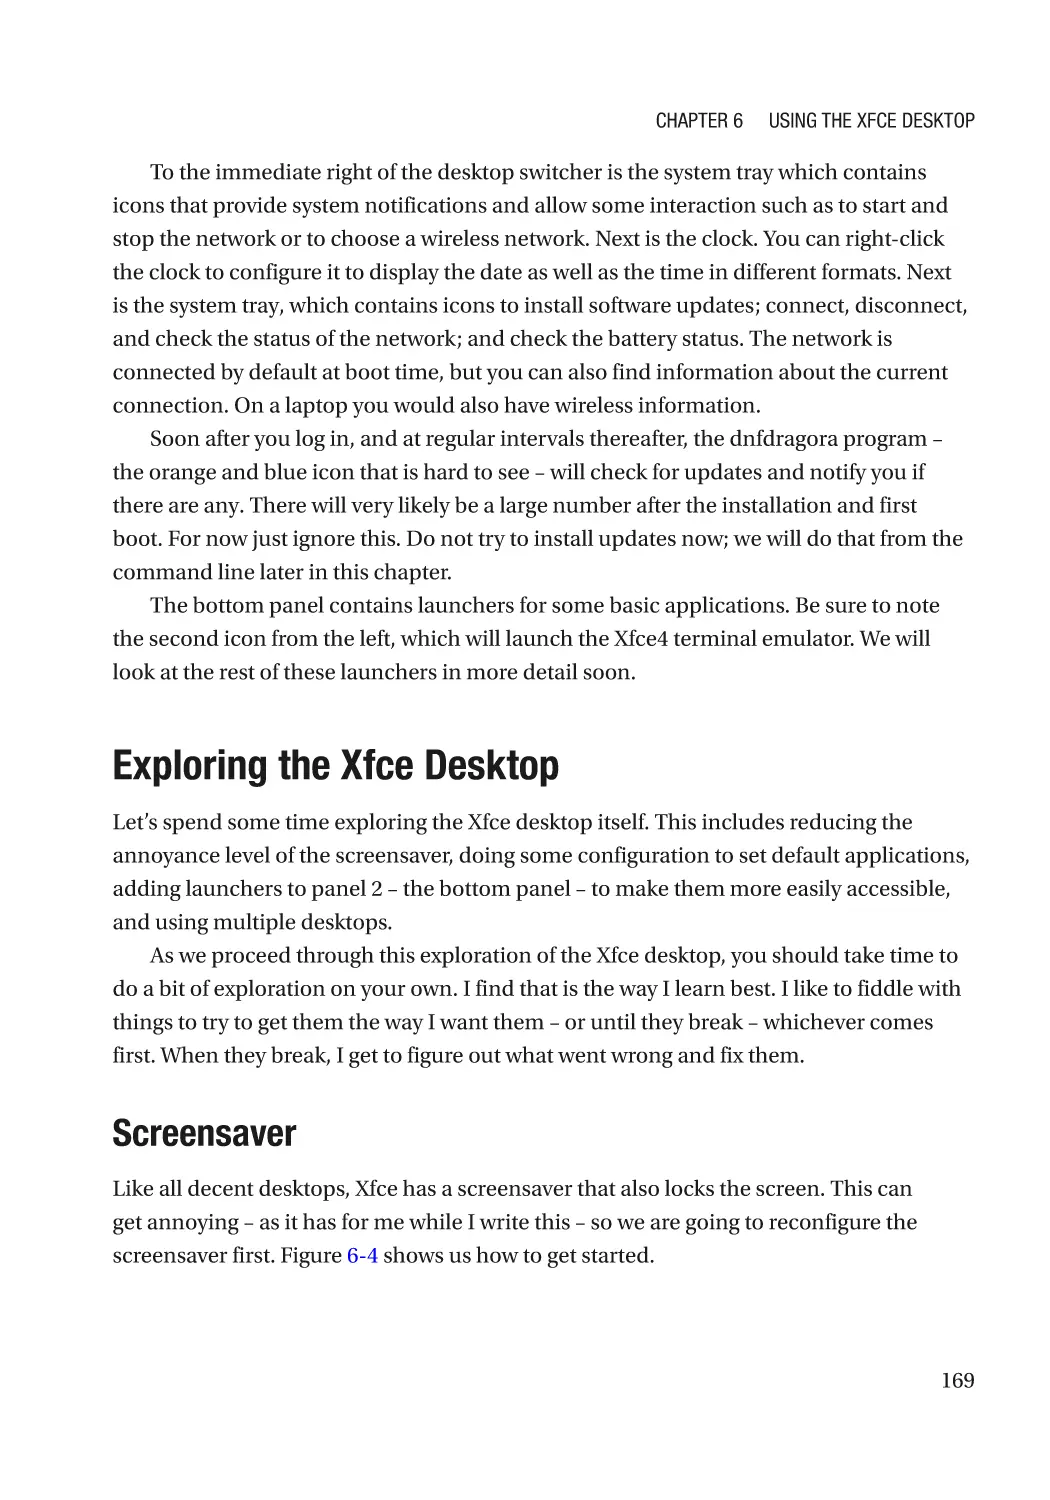 Exploring the Xfce Desktop
Screensaver